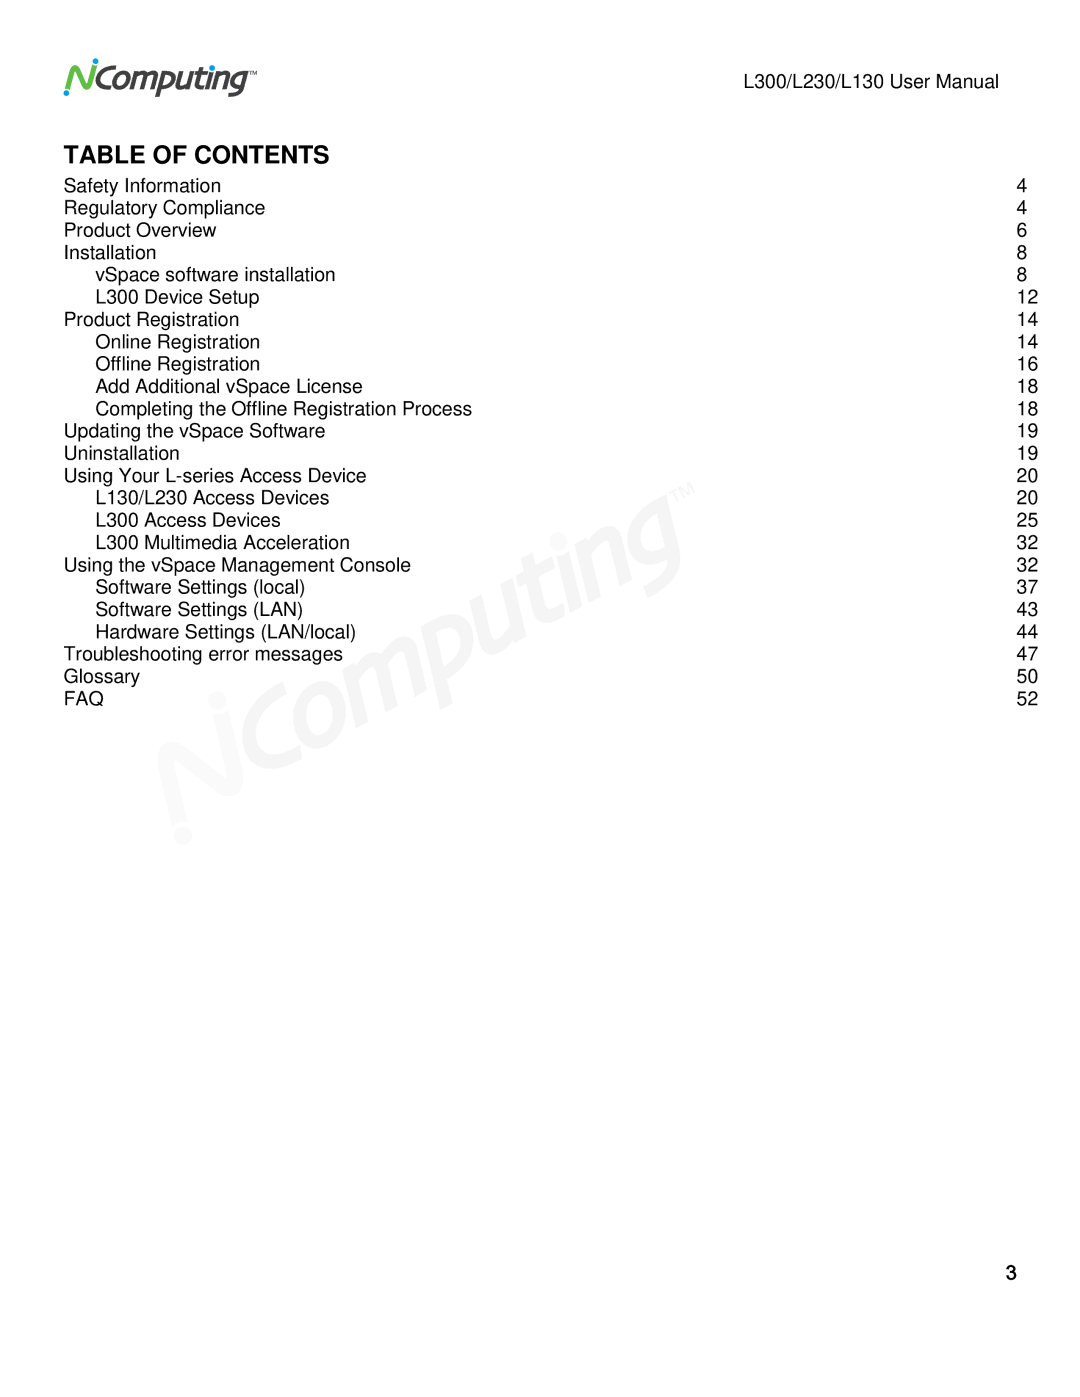 NComputing L230, L130, L300 user manual Table of Contents 